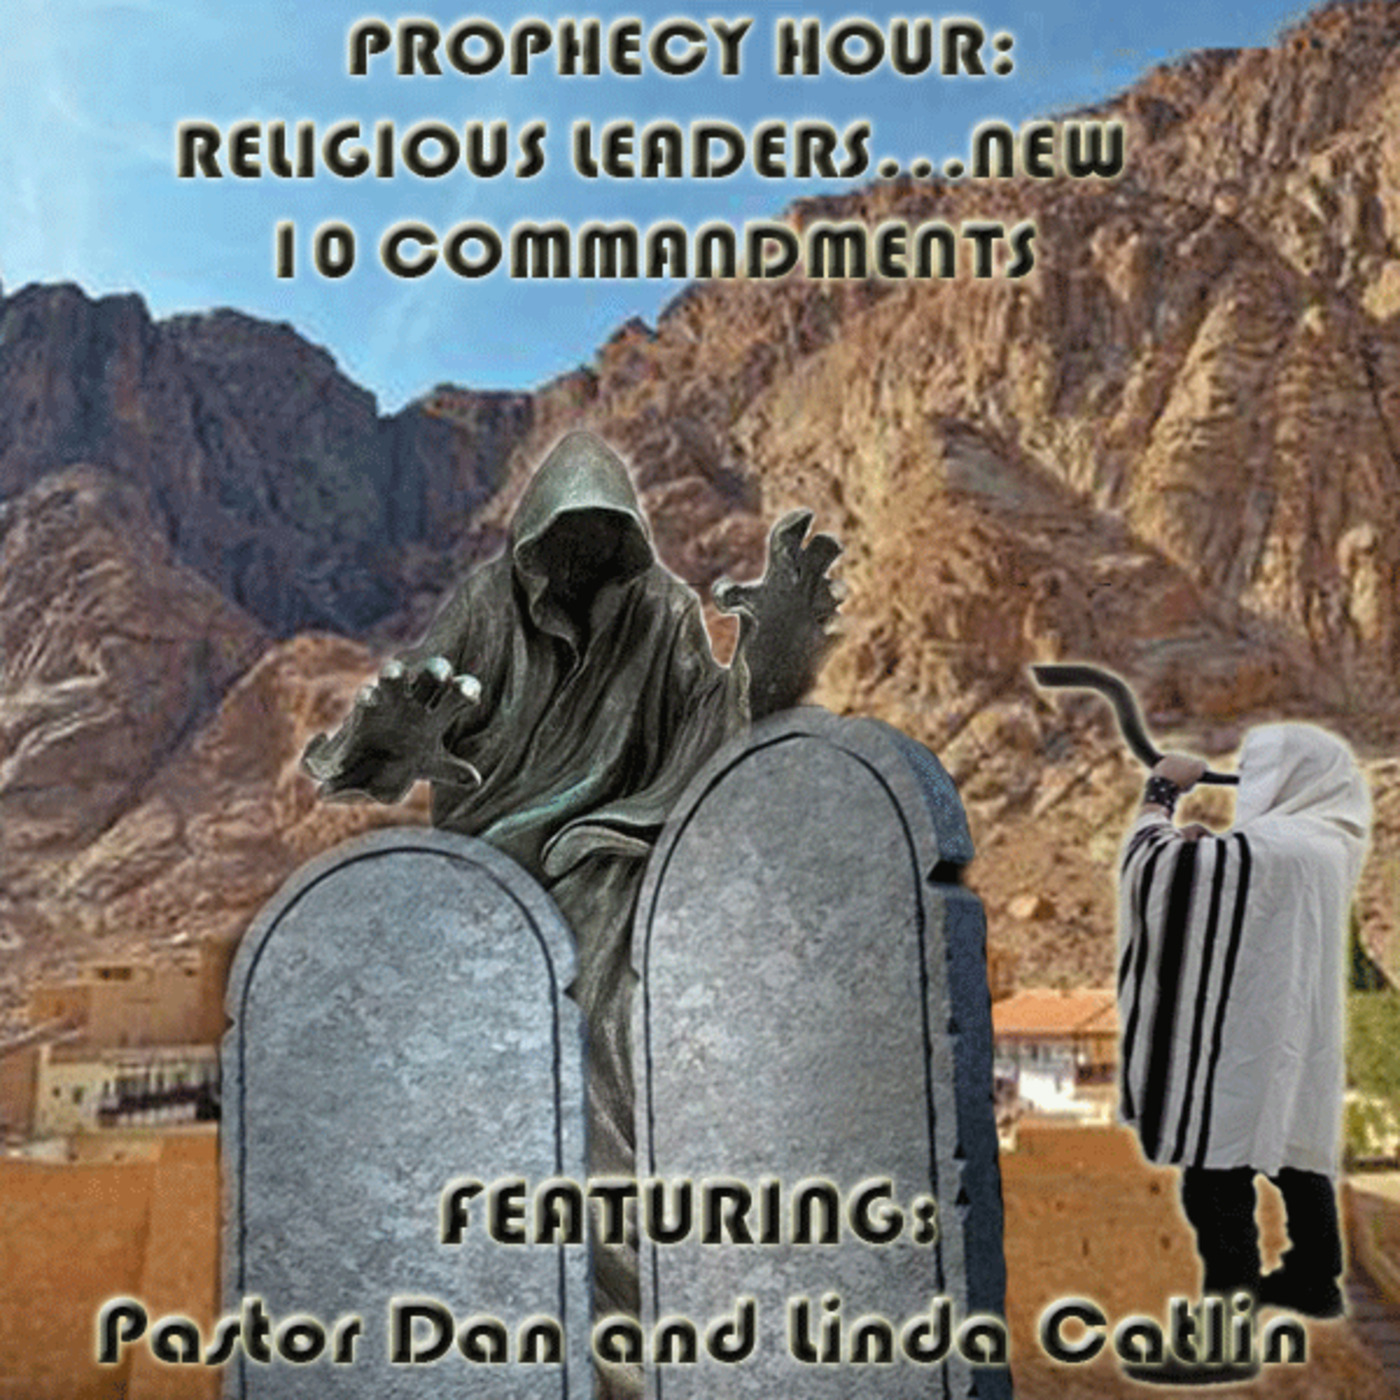 Episode 1149: PROPHECY HOUR: RELIGIOUS LEADERS...NEW 10 COMMANDMENTS